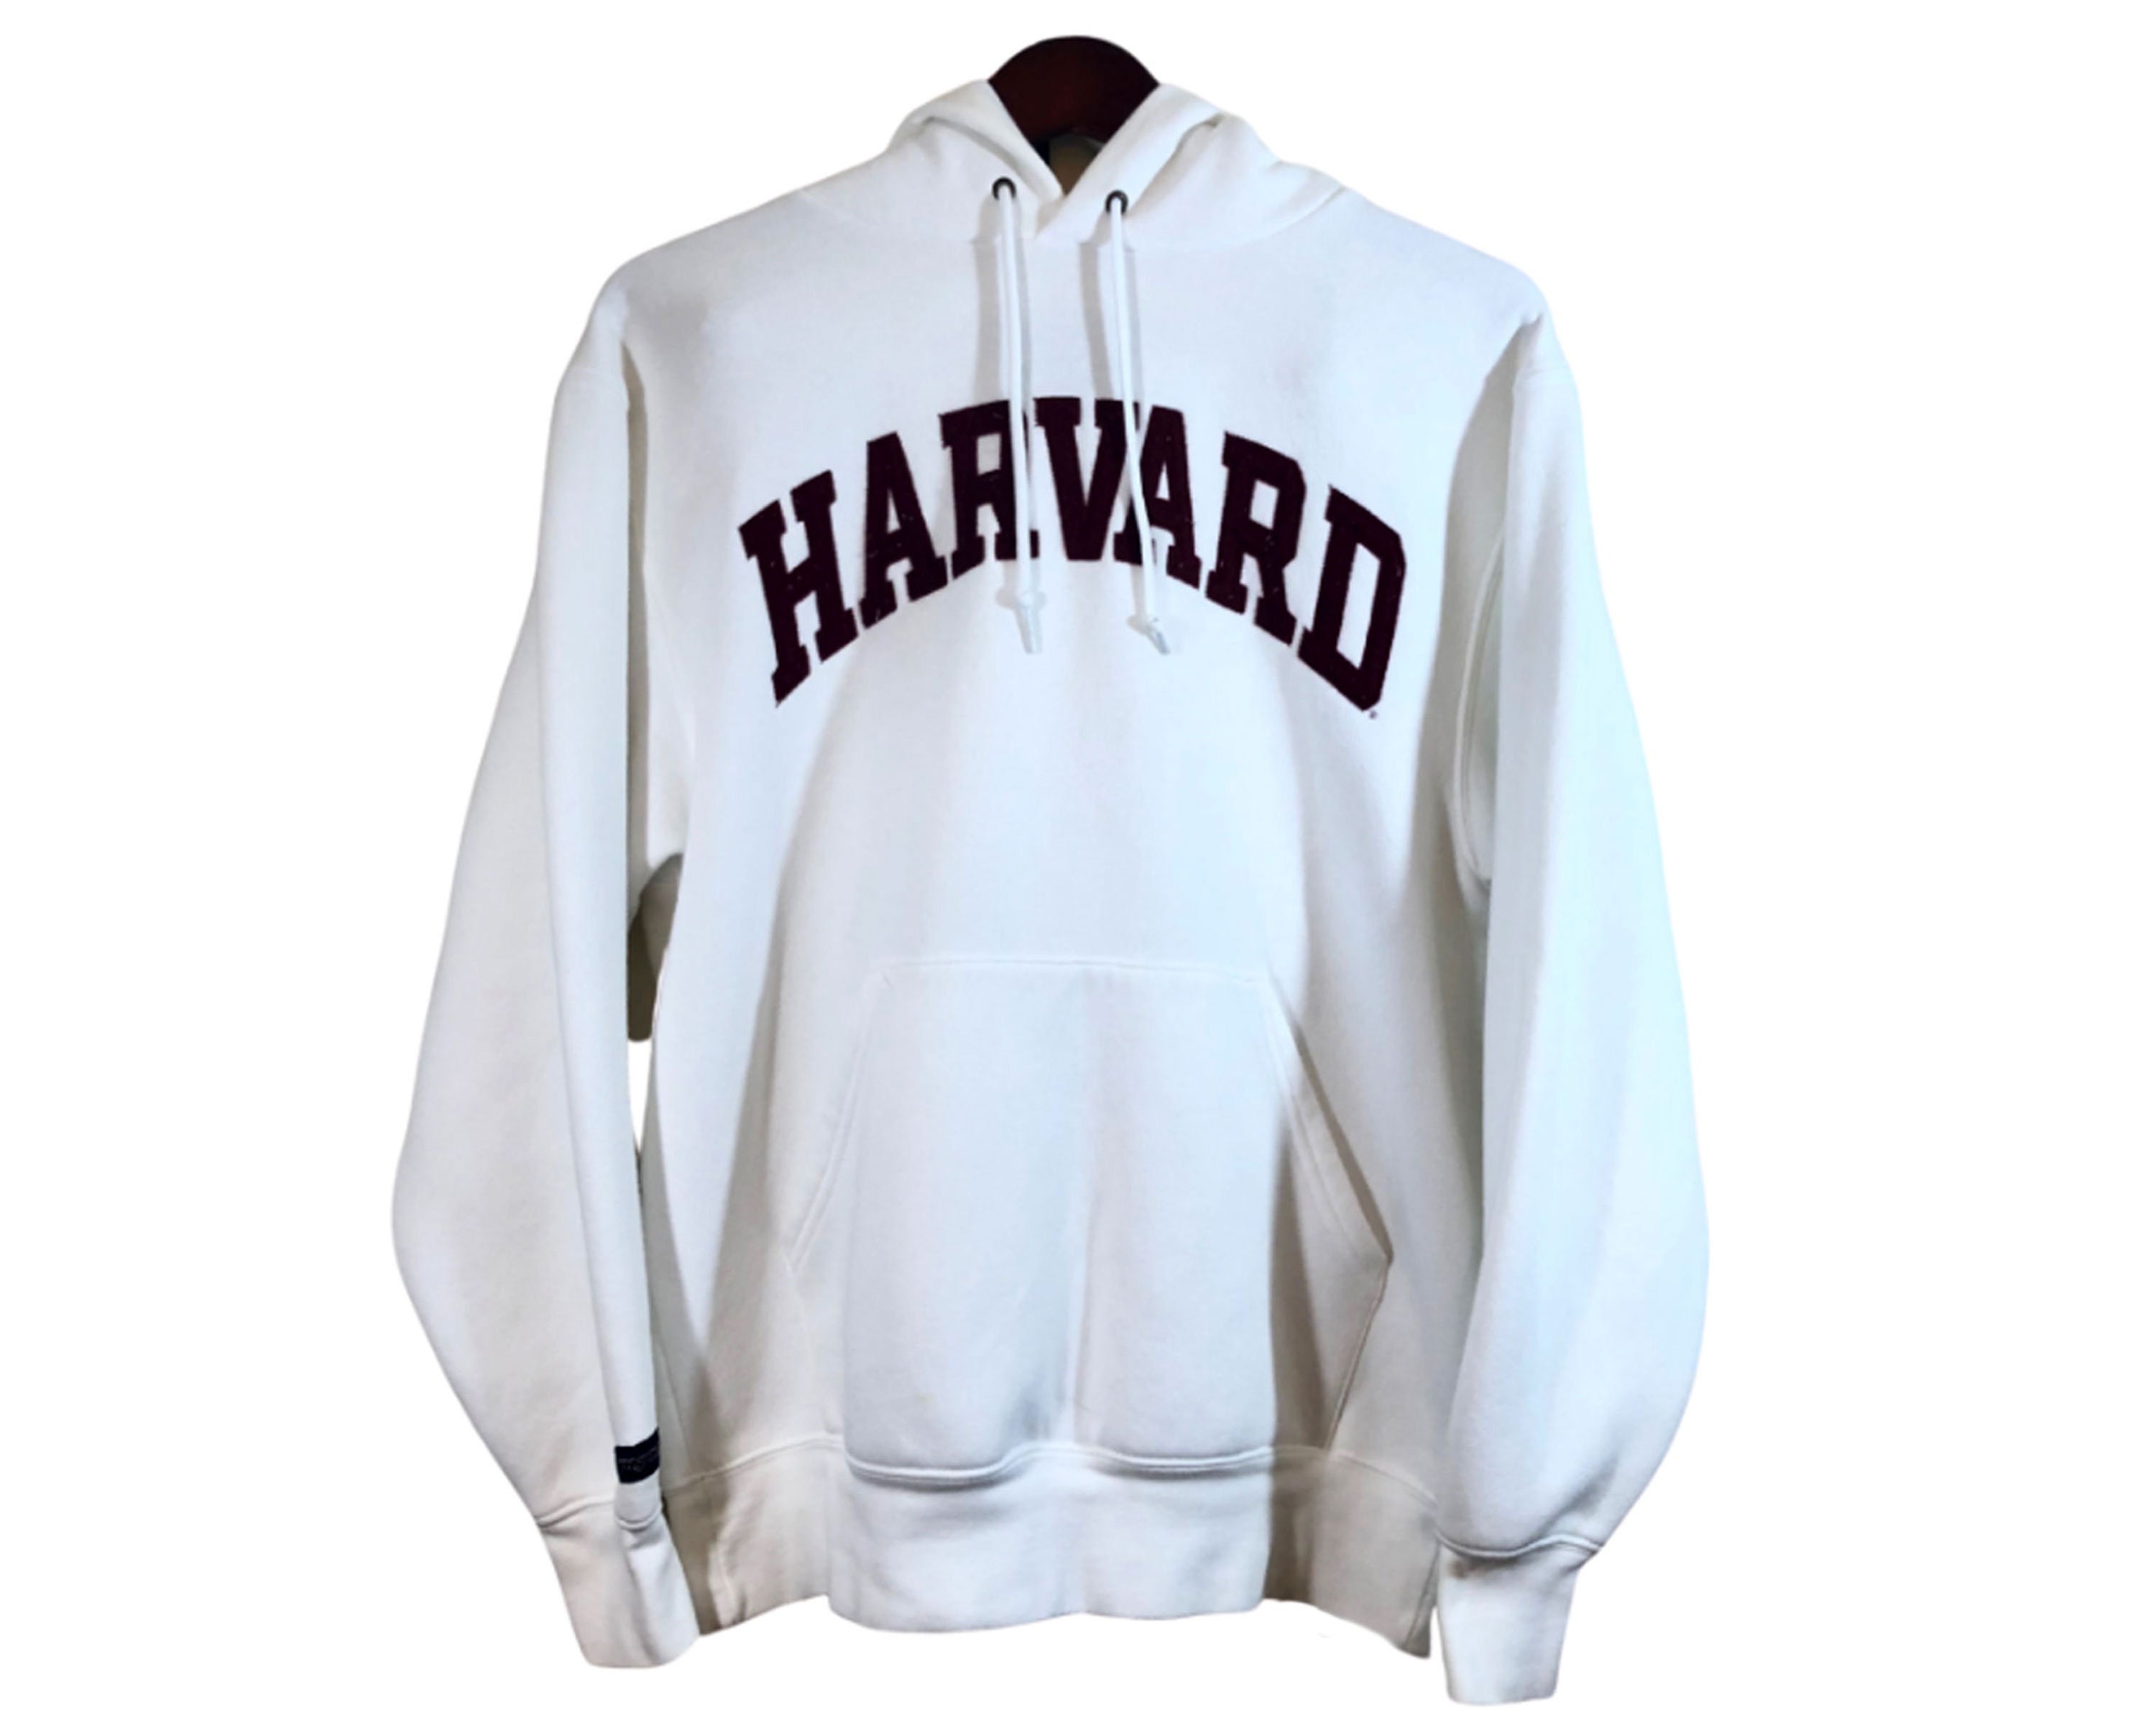 Vtg HARVARD UNIVERSITY x CHAMPION Reverse Weave Sweatshirt Pullover Ivy League Alma Mater Clothing Mens Clothing Hoodies & Sweatshirts Sweatshirts 